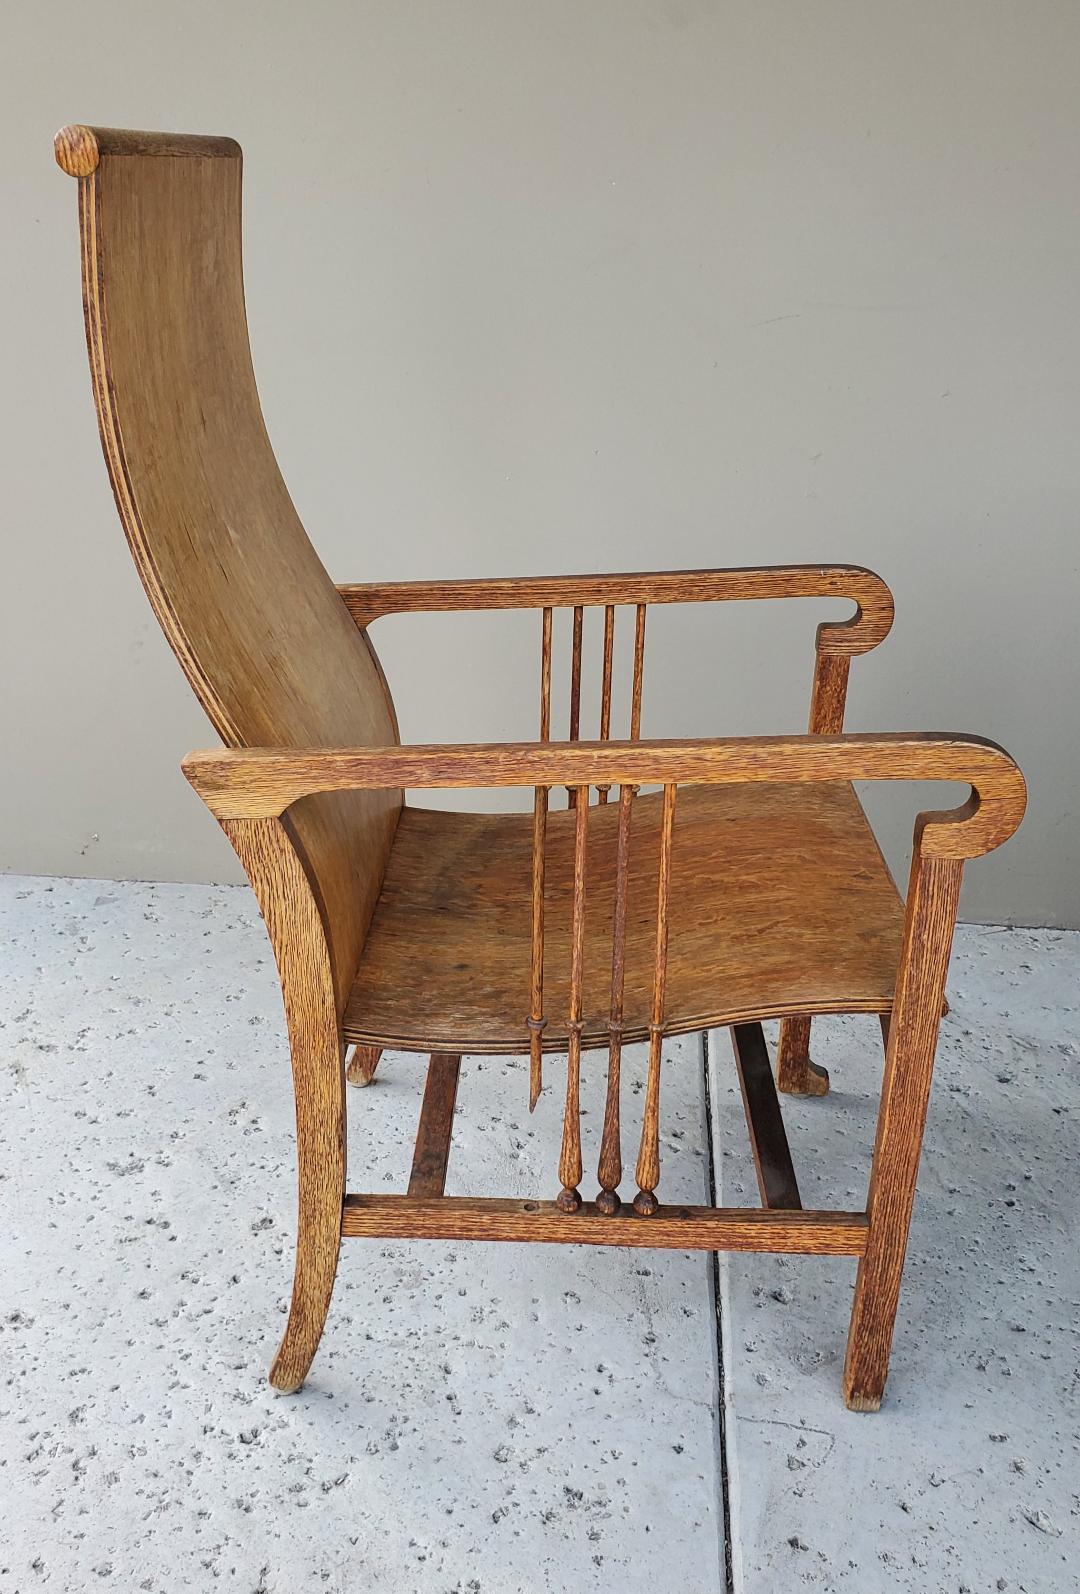 Antique Mission Arts & Crafts Craftsman Quarter Sawn Oak Tall Back Resting Chair For Sale 1